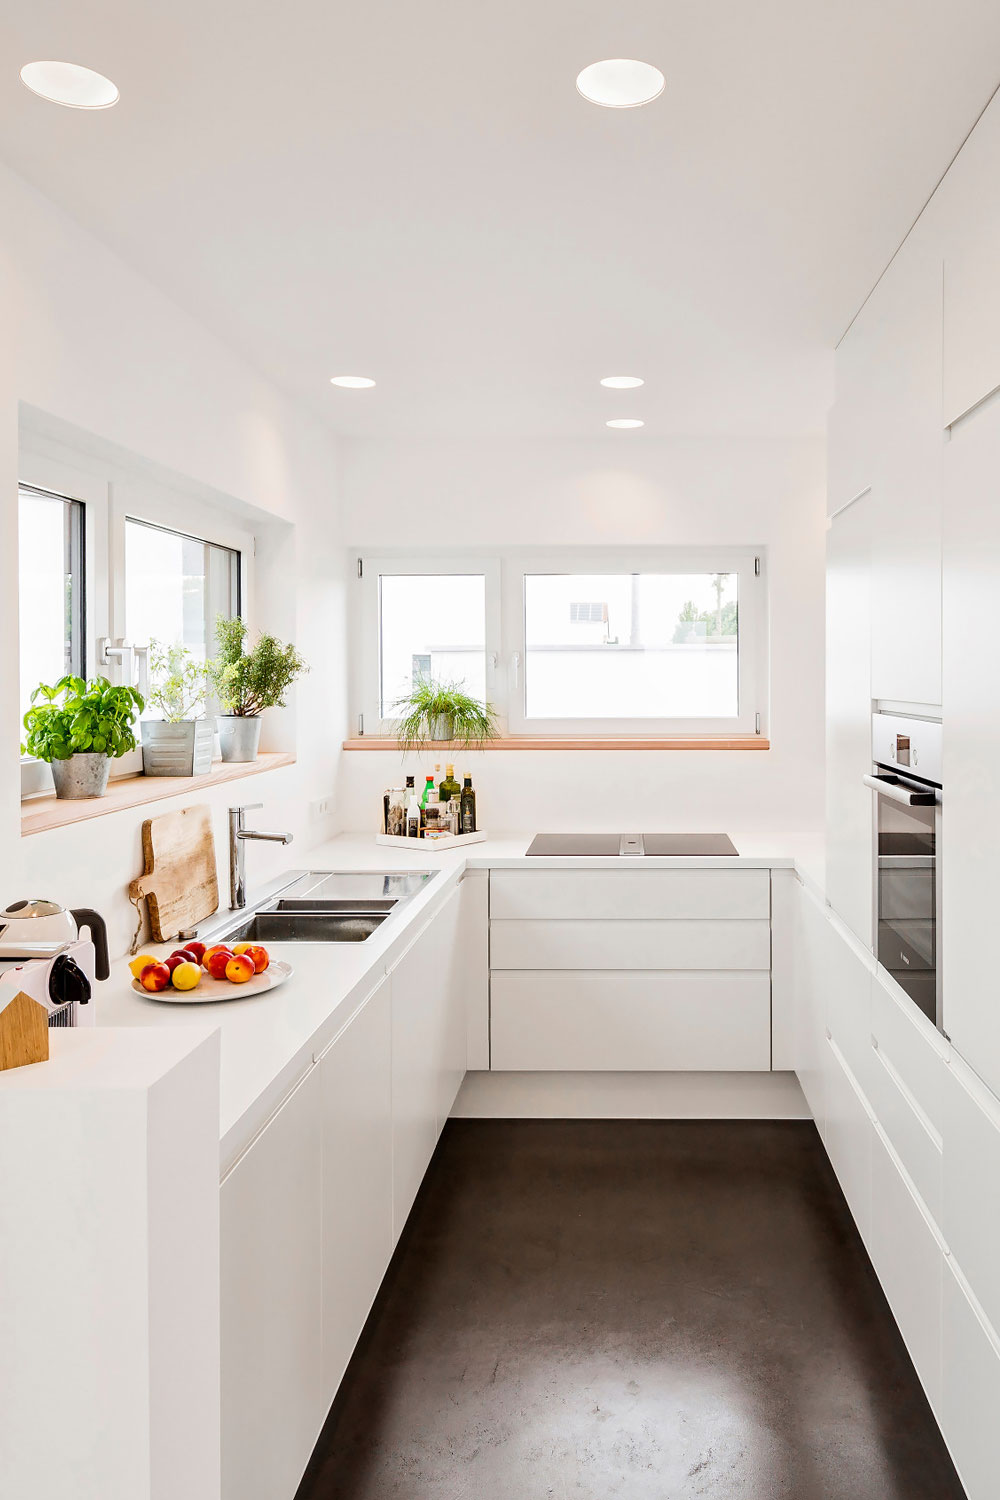 6 Minimalist Kitchen Ideas To Inspire Your Next Remodel Amberth